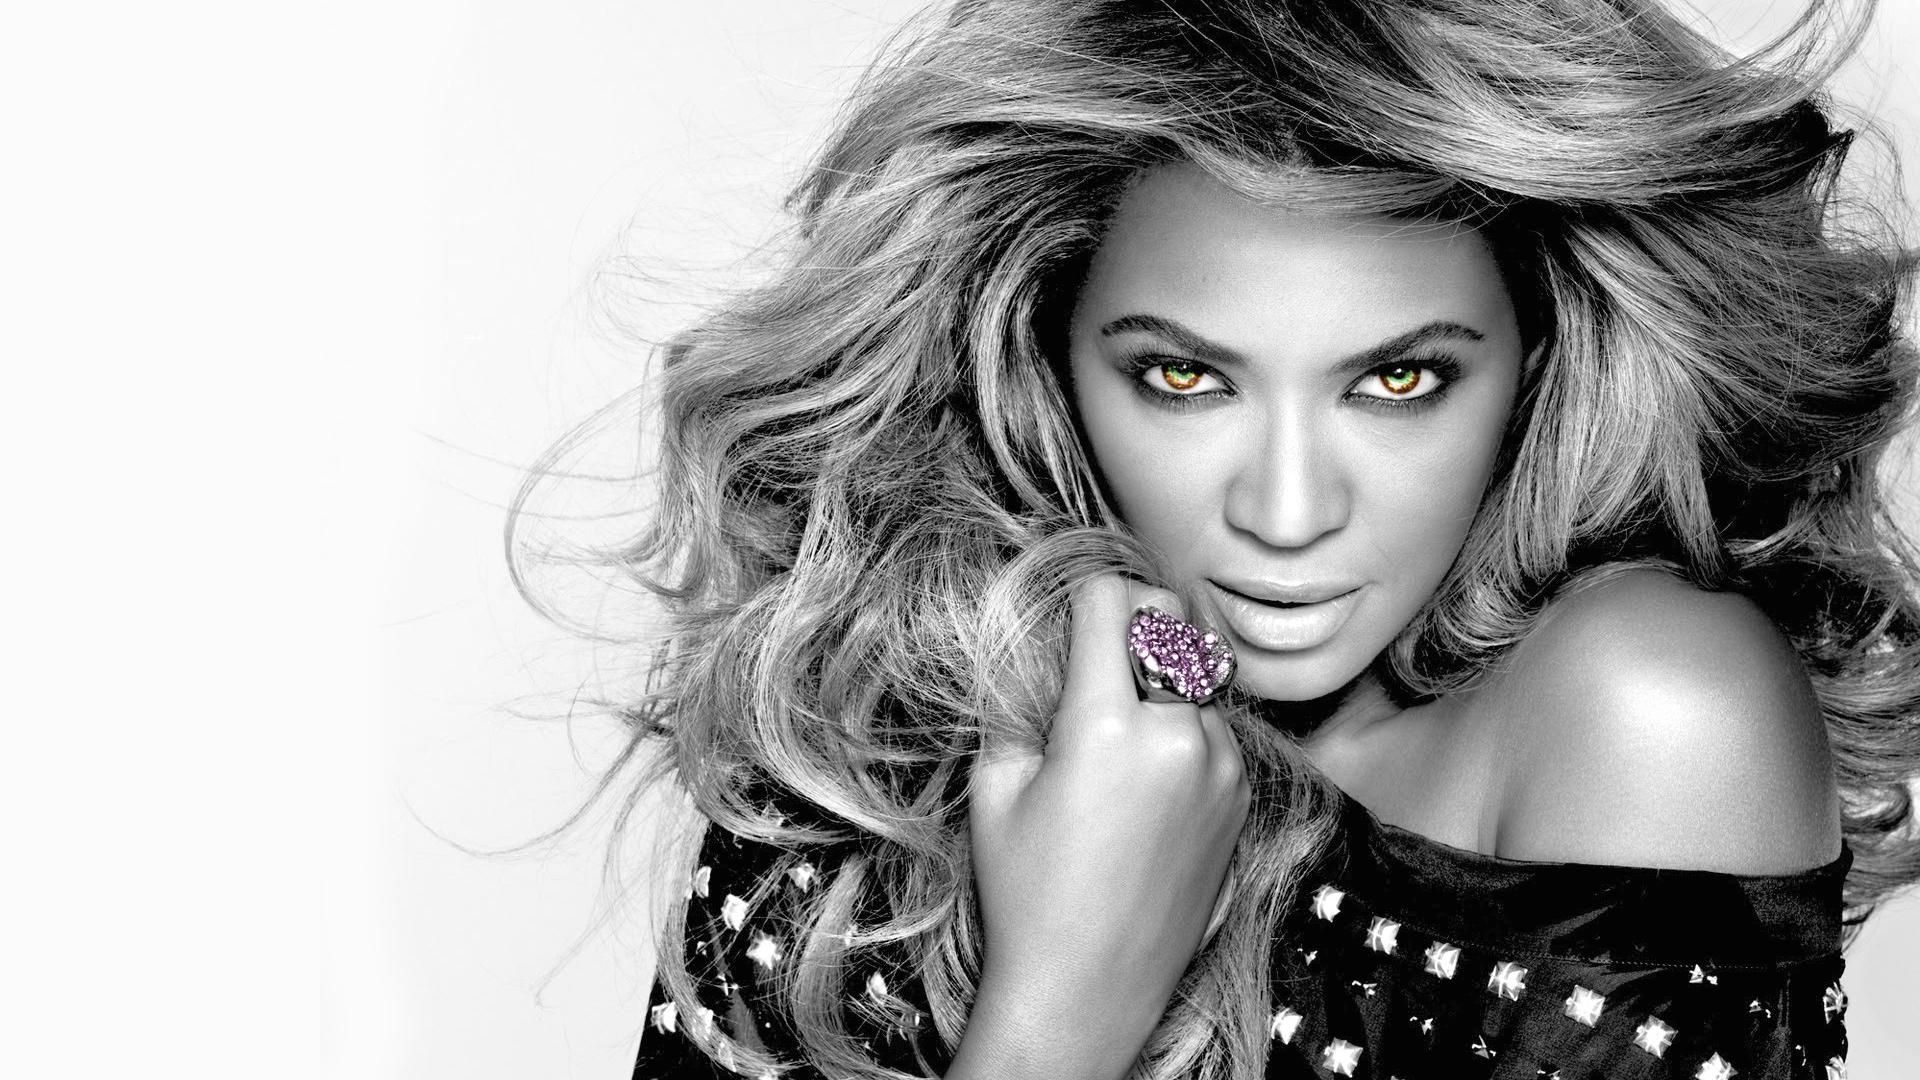 V.63: Beyonce Wallpaper, HD Image Of Beyonce, Ultra HD 4K